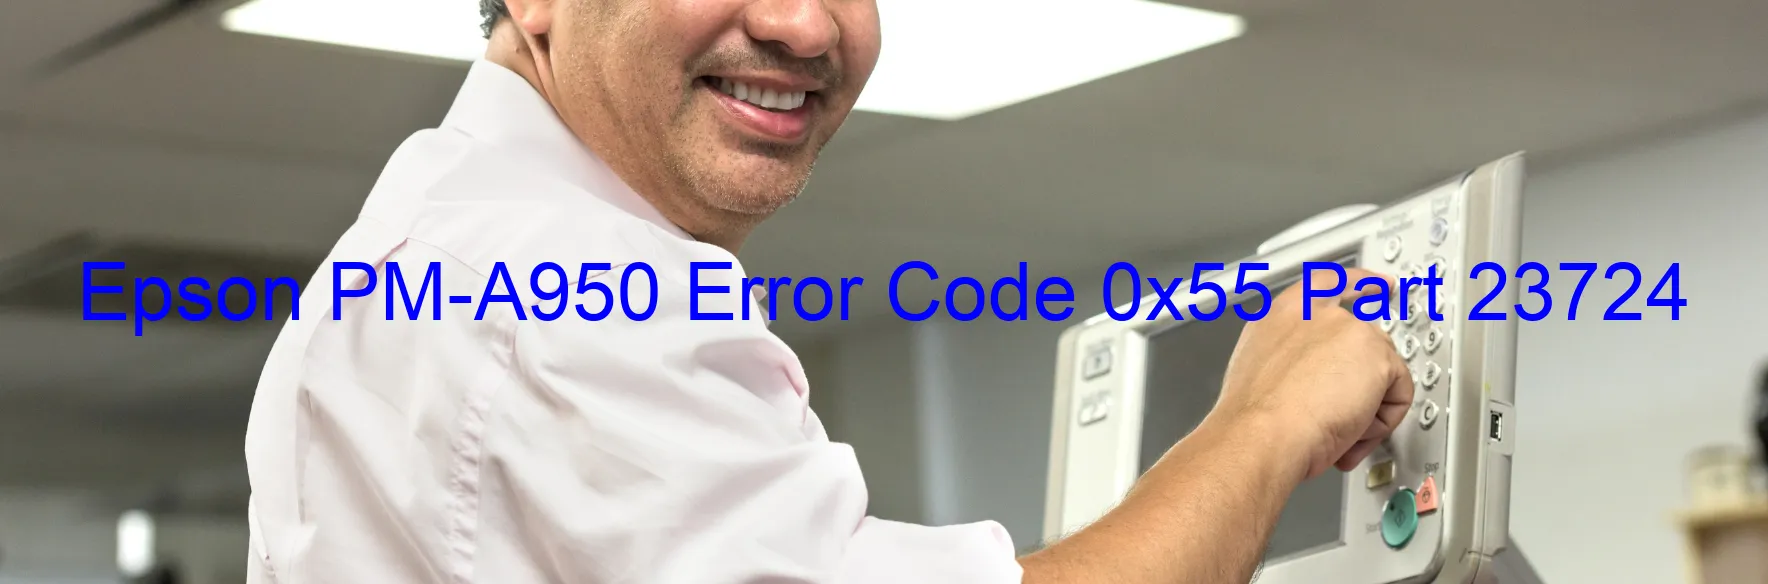 Epson PM-A950 Error Code 0x55 Part 23724